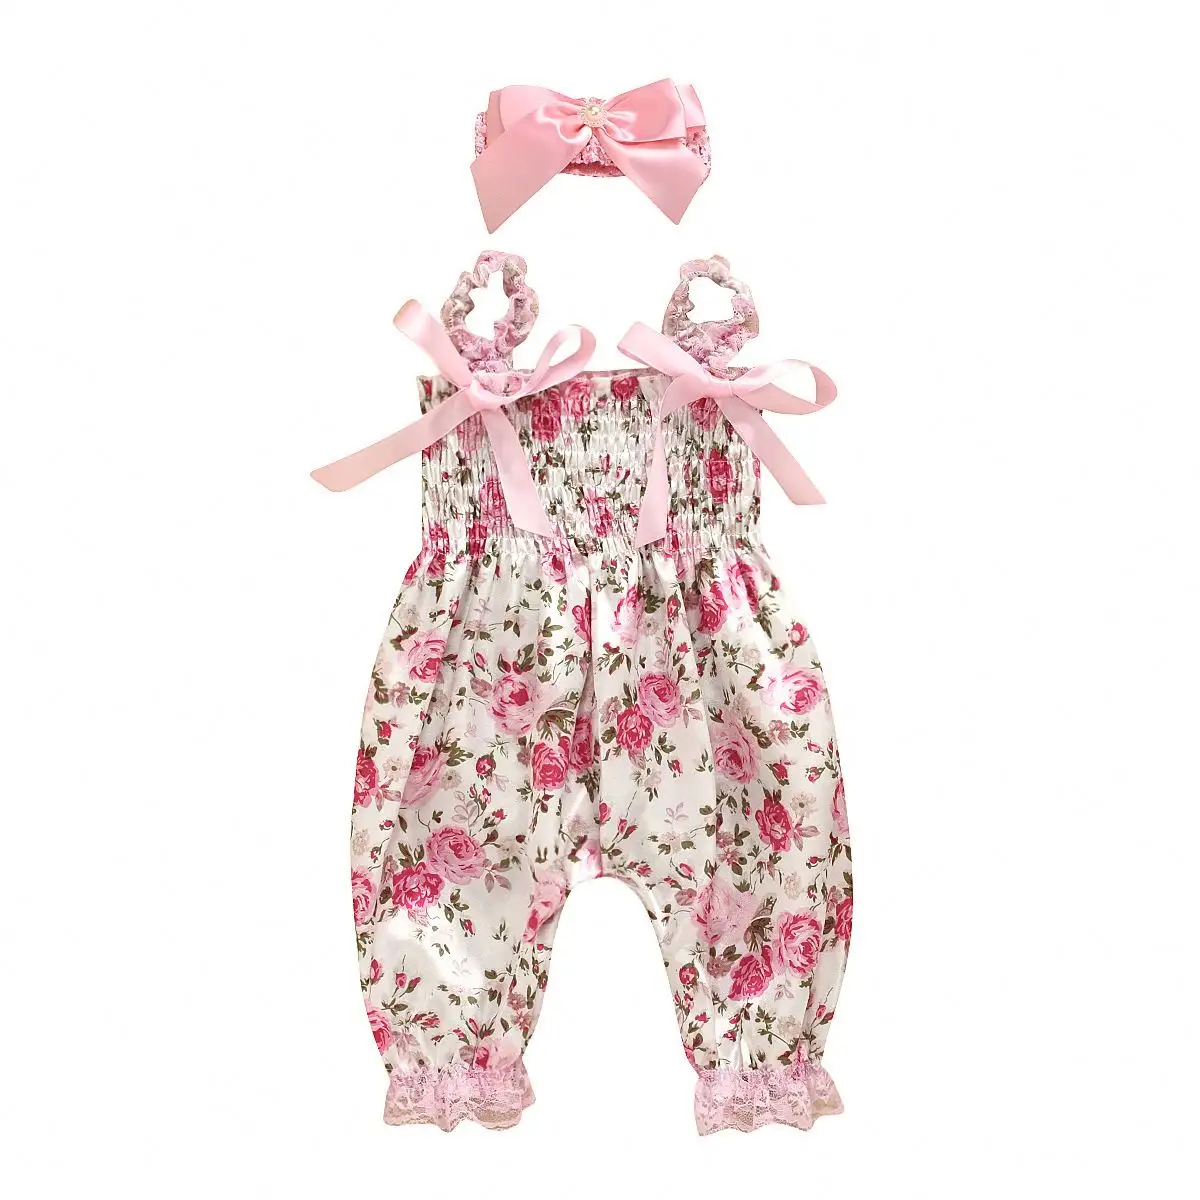 Grosir ikat kepala perempuan baju bayi motif bunga Jumpsuit tali baju memanjat panjang baju monyet bayi baru lahir kain anak perempuan